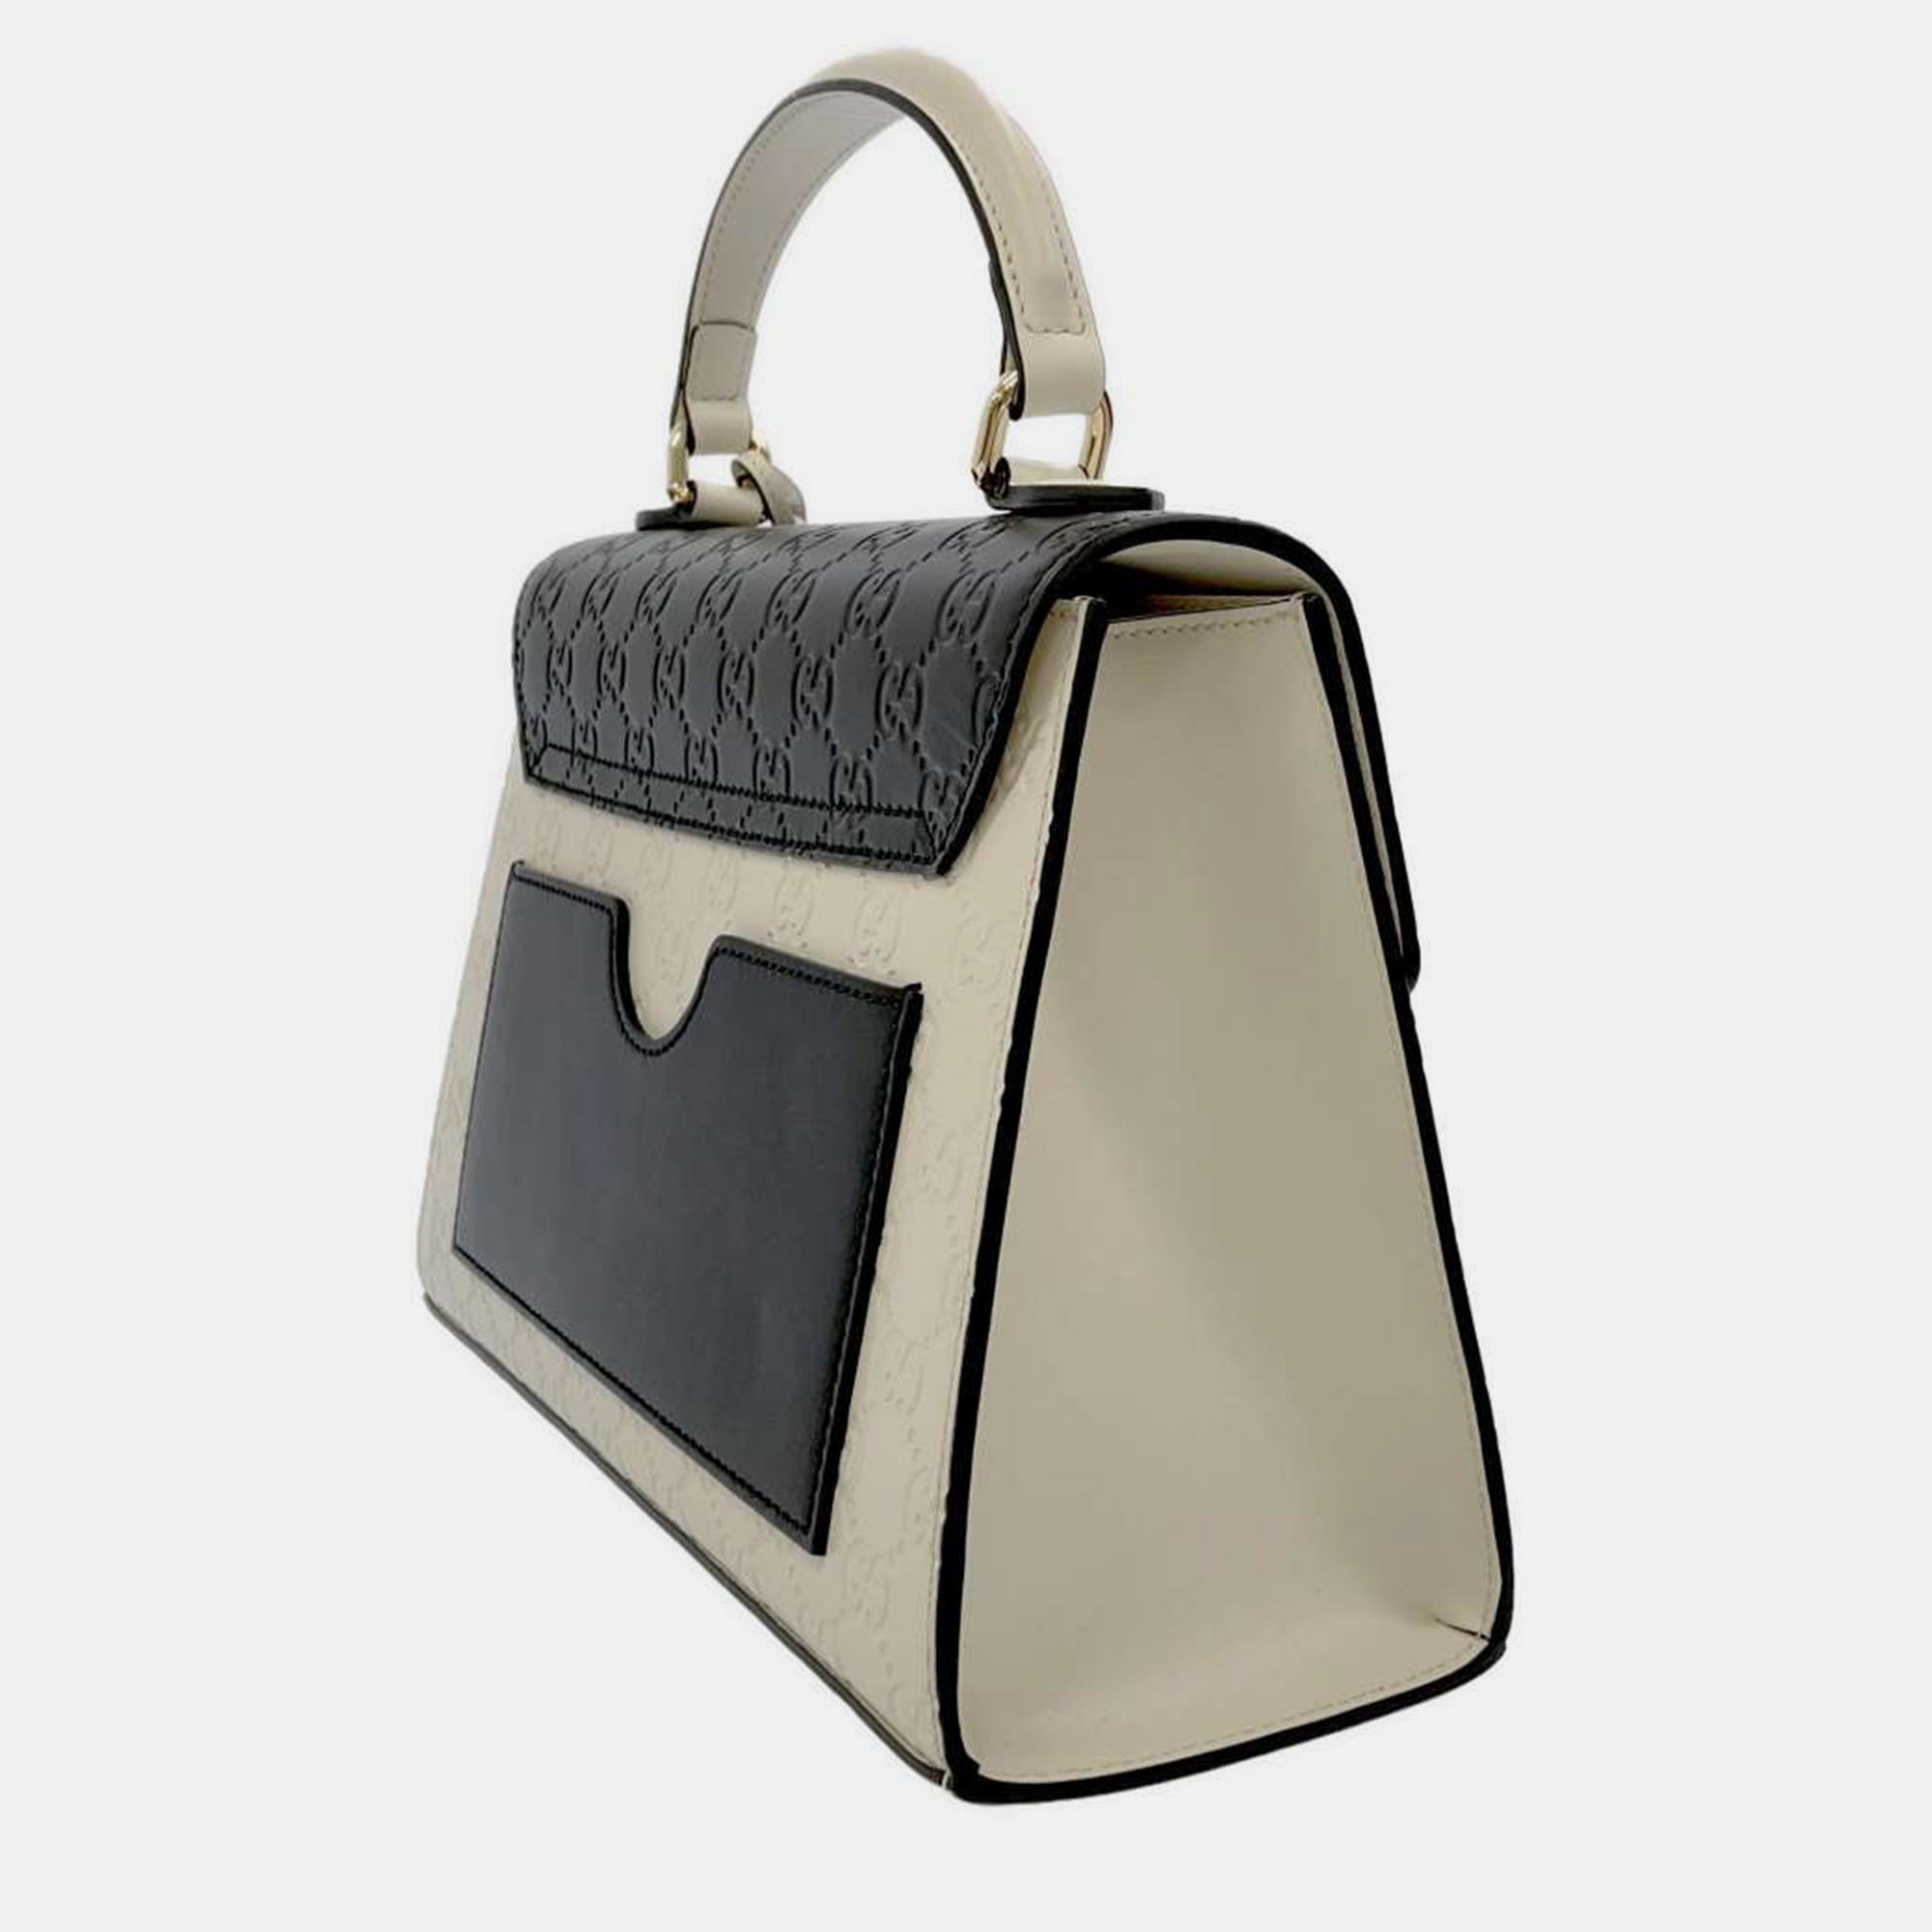 Gucci Beige/Black Leather Medium GG Supreme Padlock Top Handle Bag